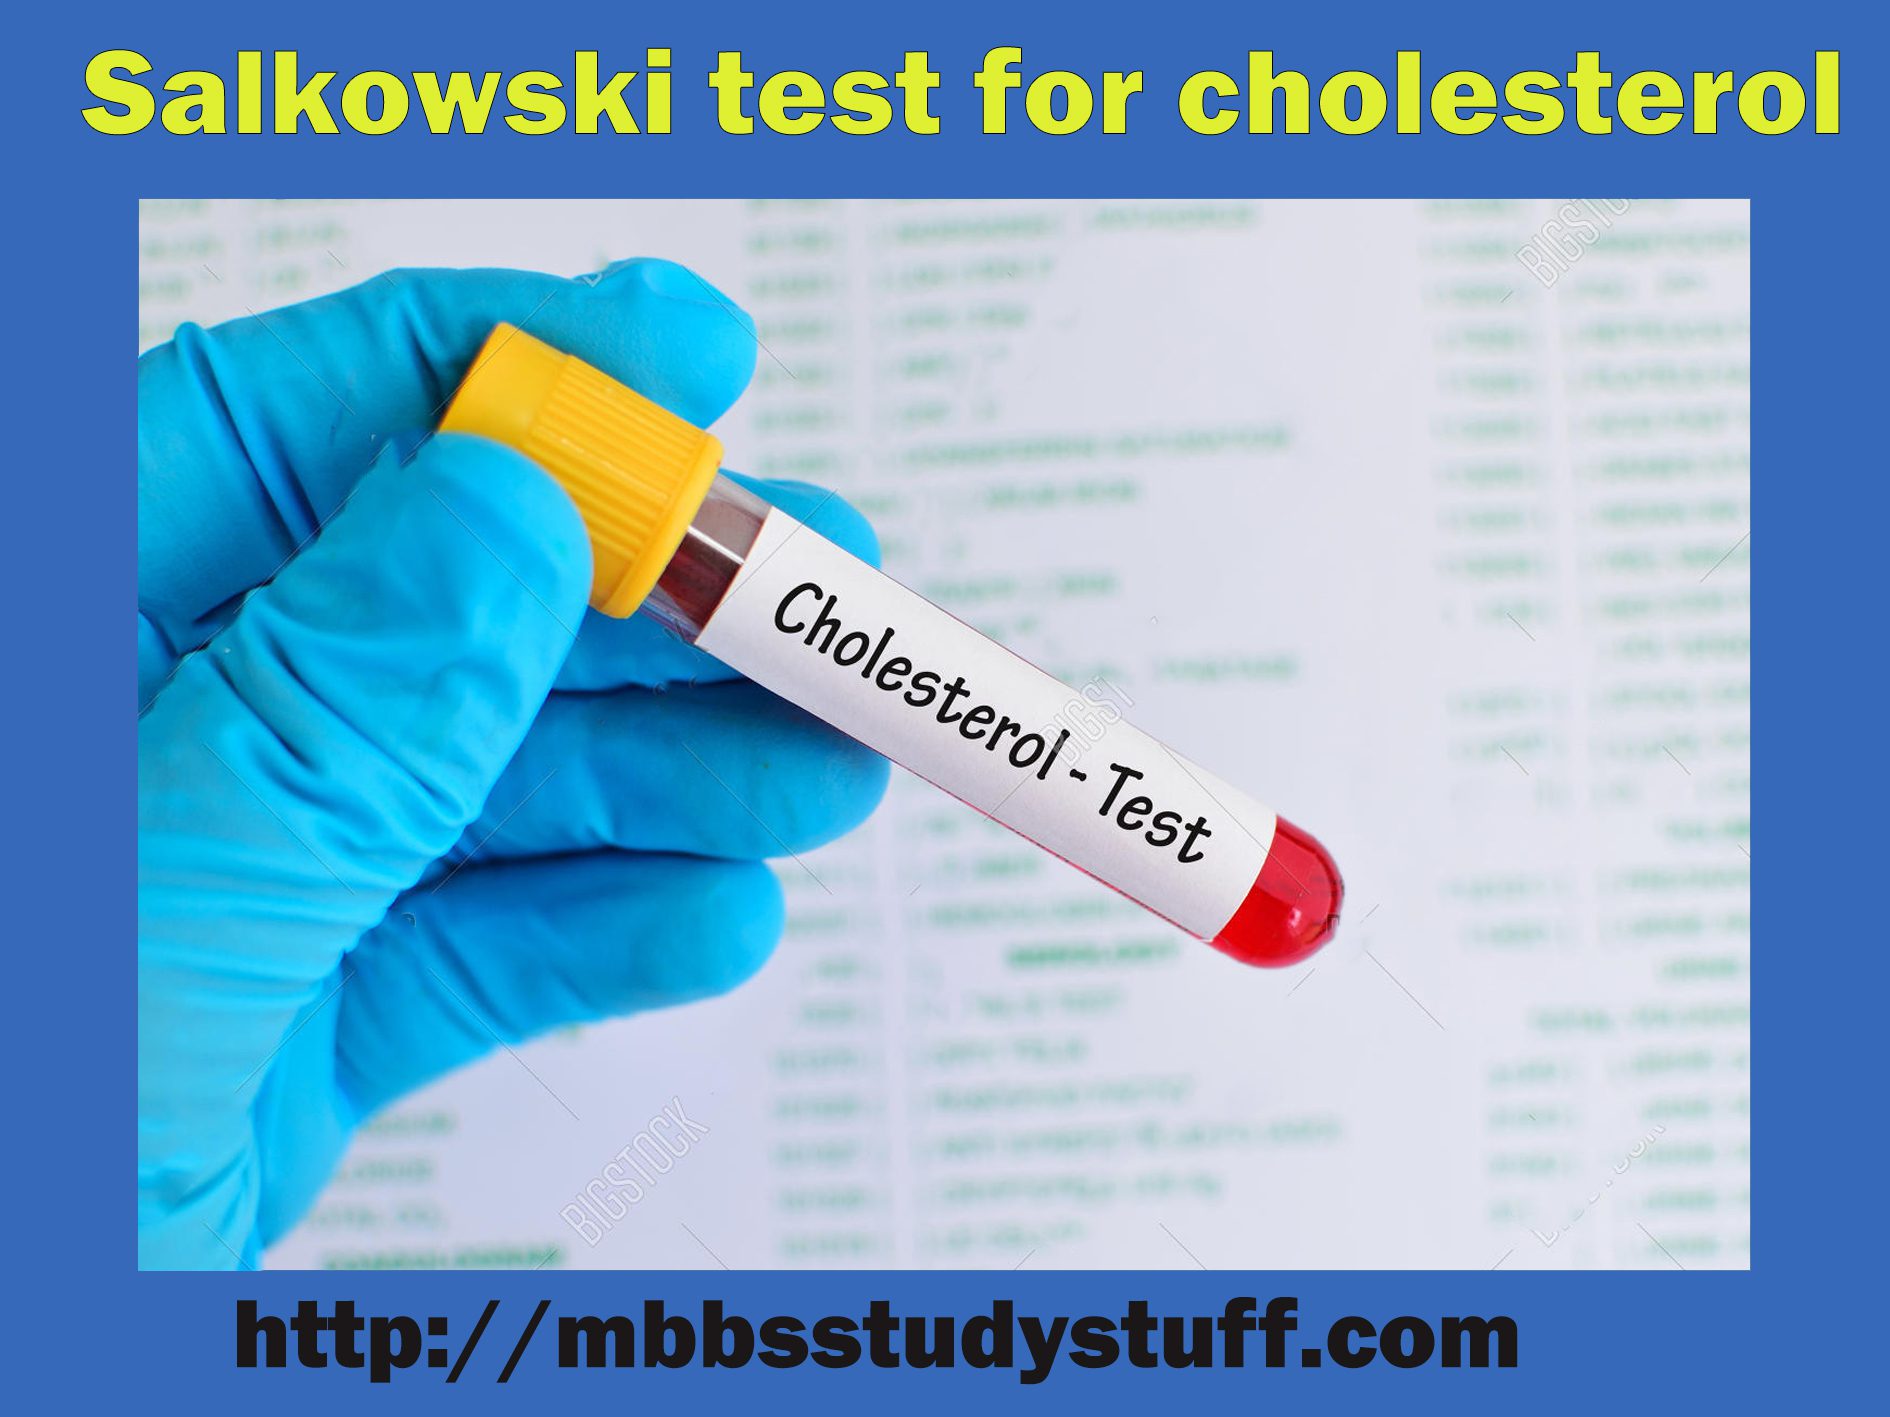 Salkowski test for cholesterol - Its principle and procedure